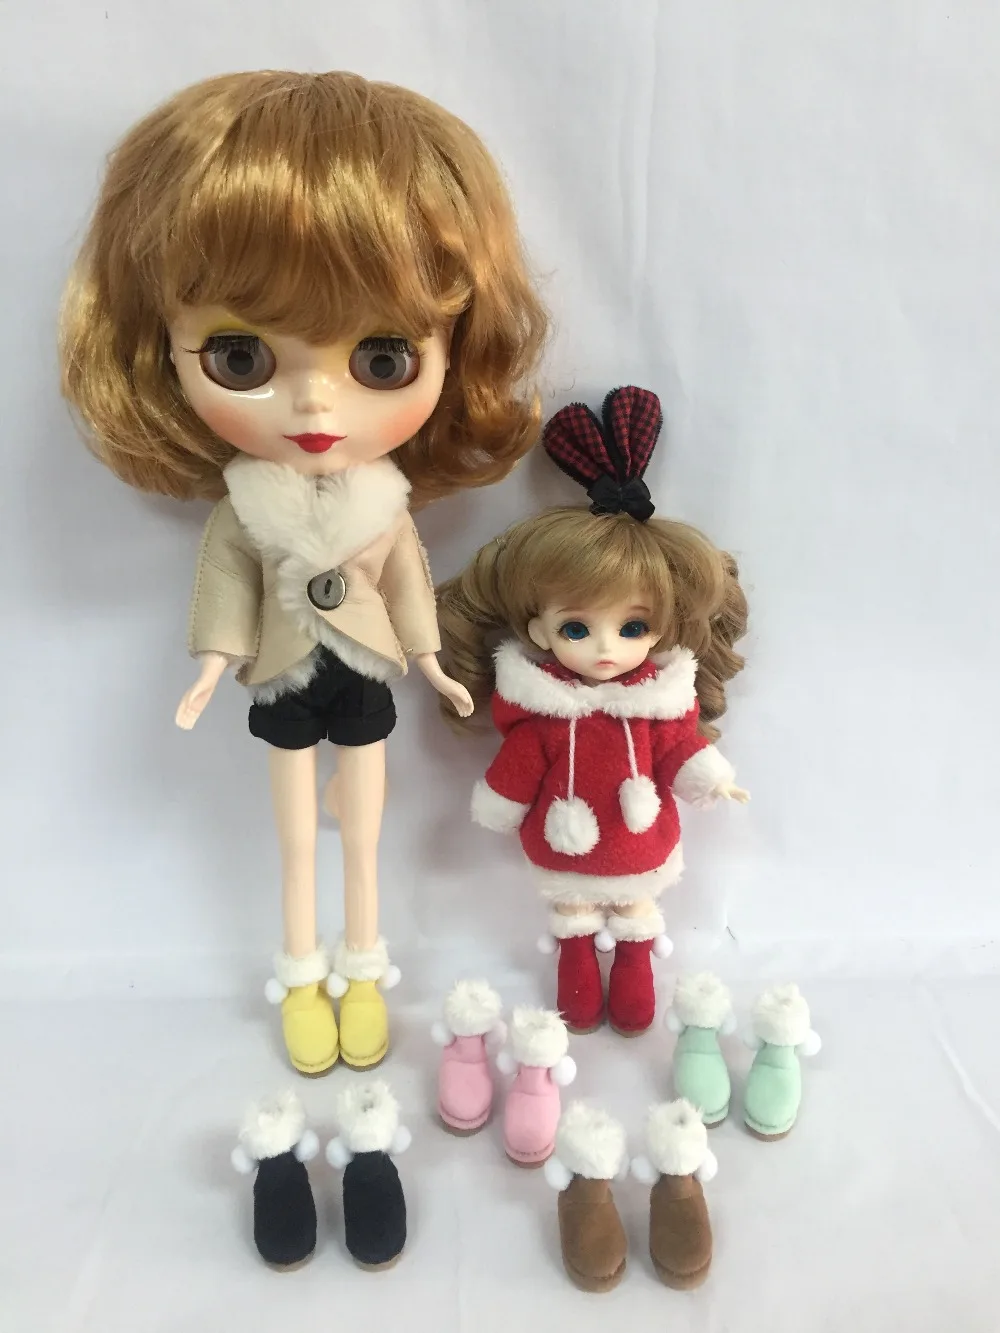 Кукольная обувь ботинки для кукол blyth Azon куклы OB кукла licca 1/8 bjd и т. д. Длина: 3 см |